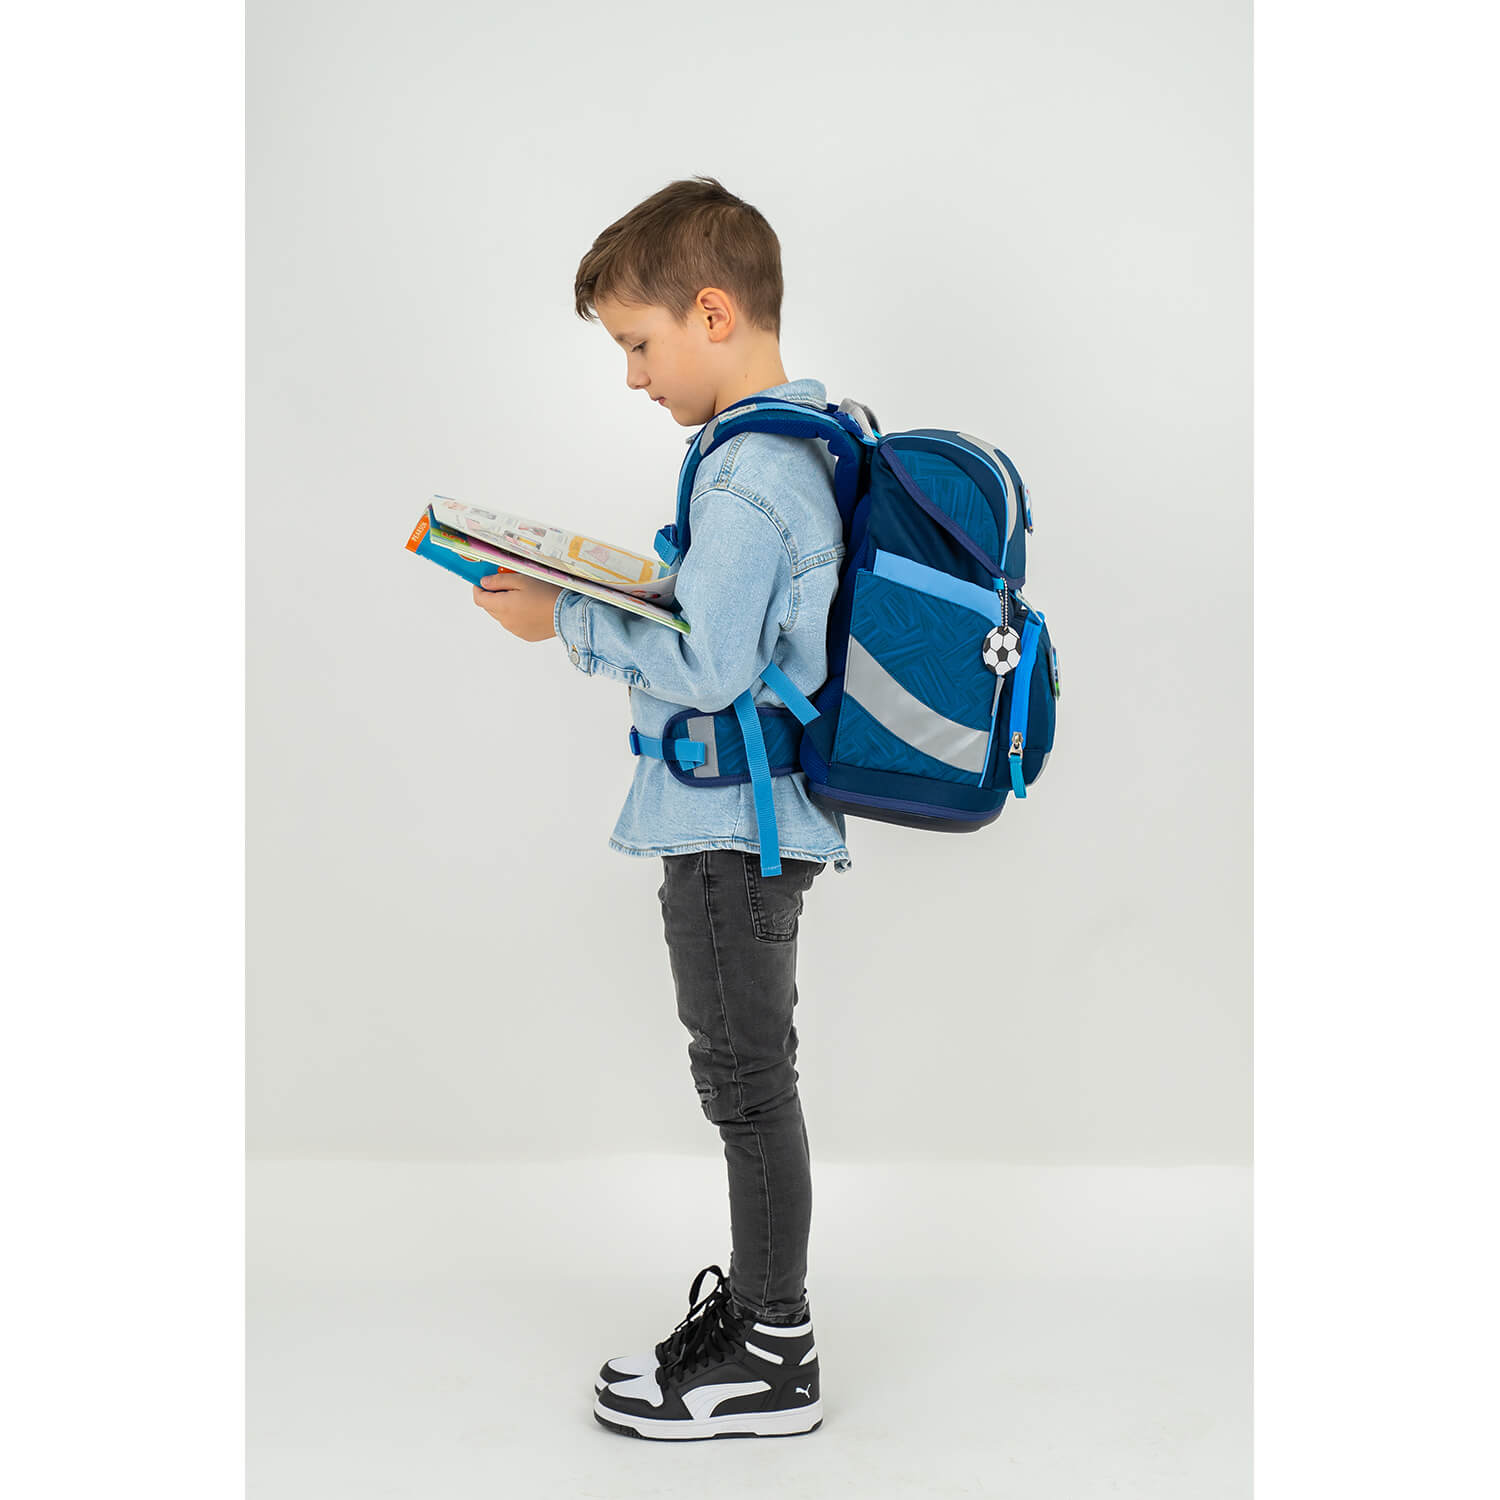 Smarty Blue Motion schoolbag set 6 pcs with GRATIS keychain